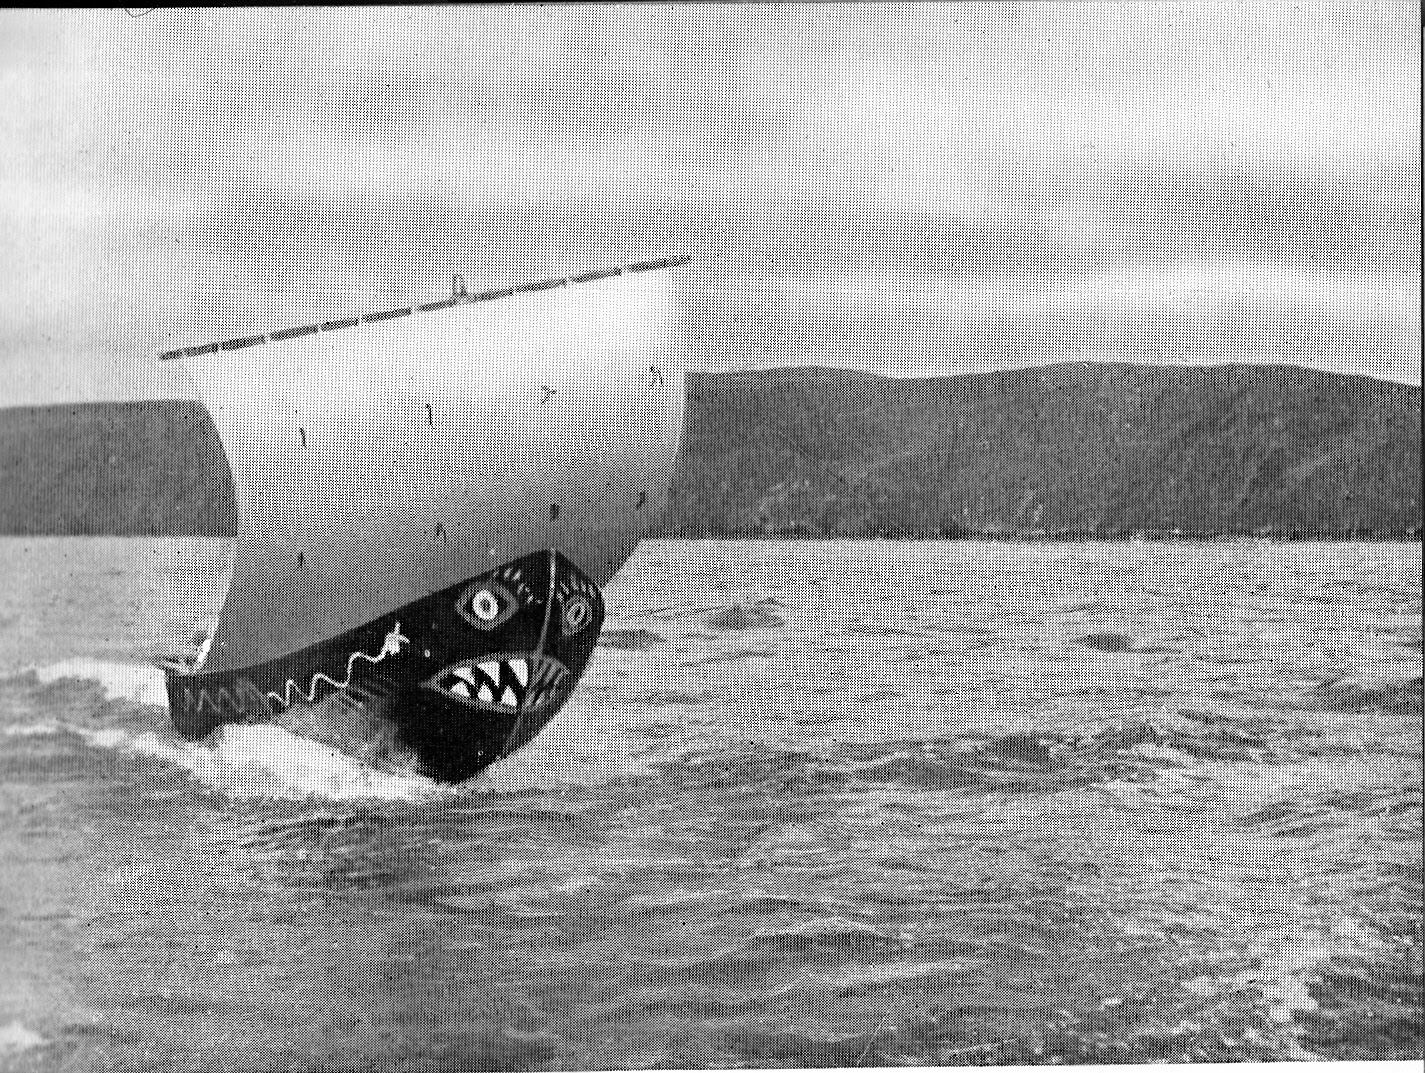 Lockley's curragh under sail